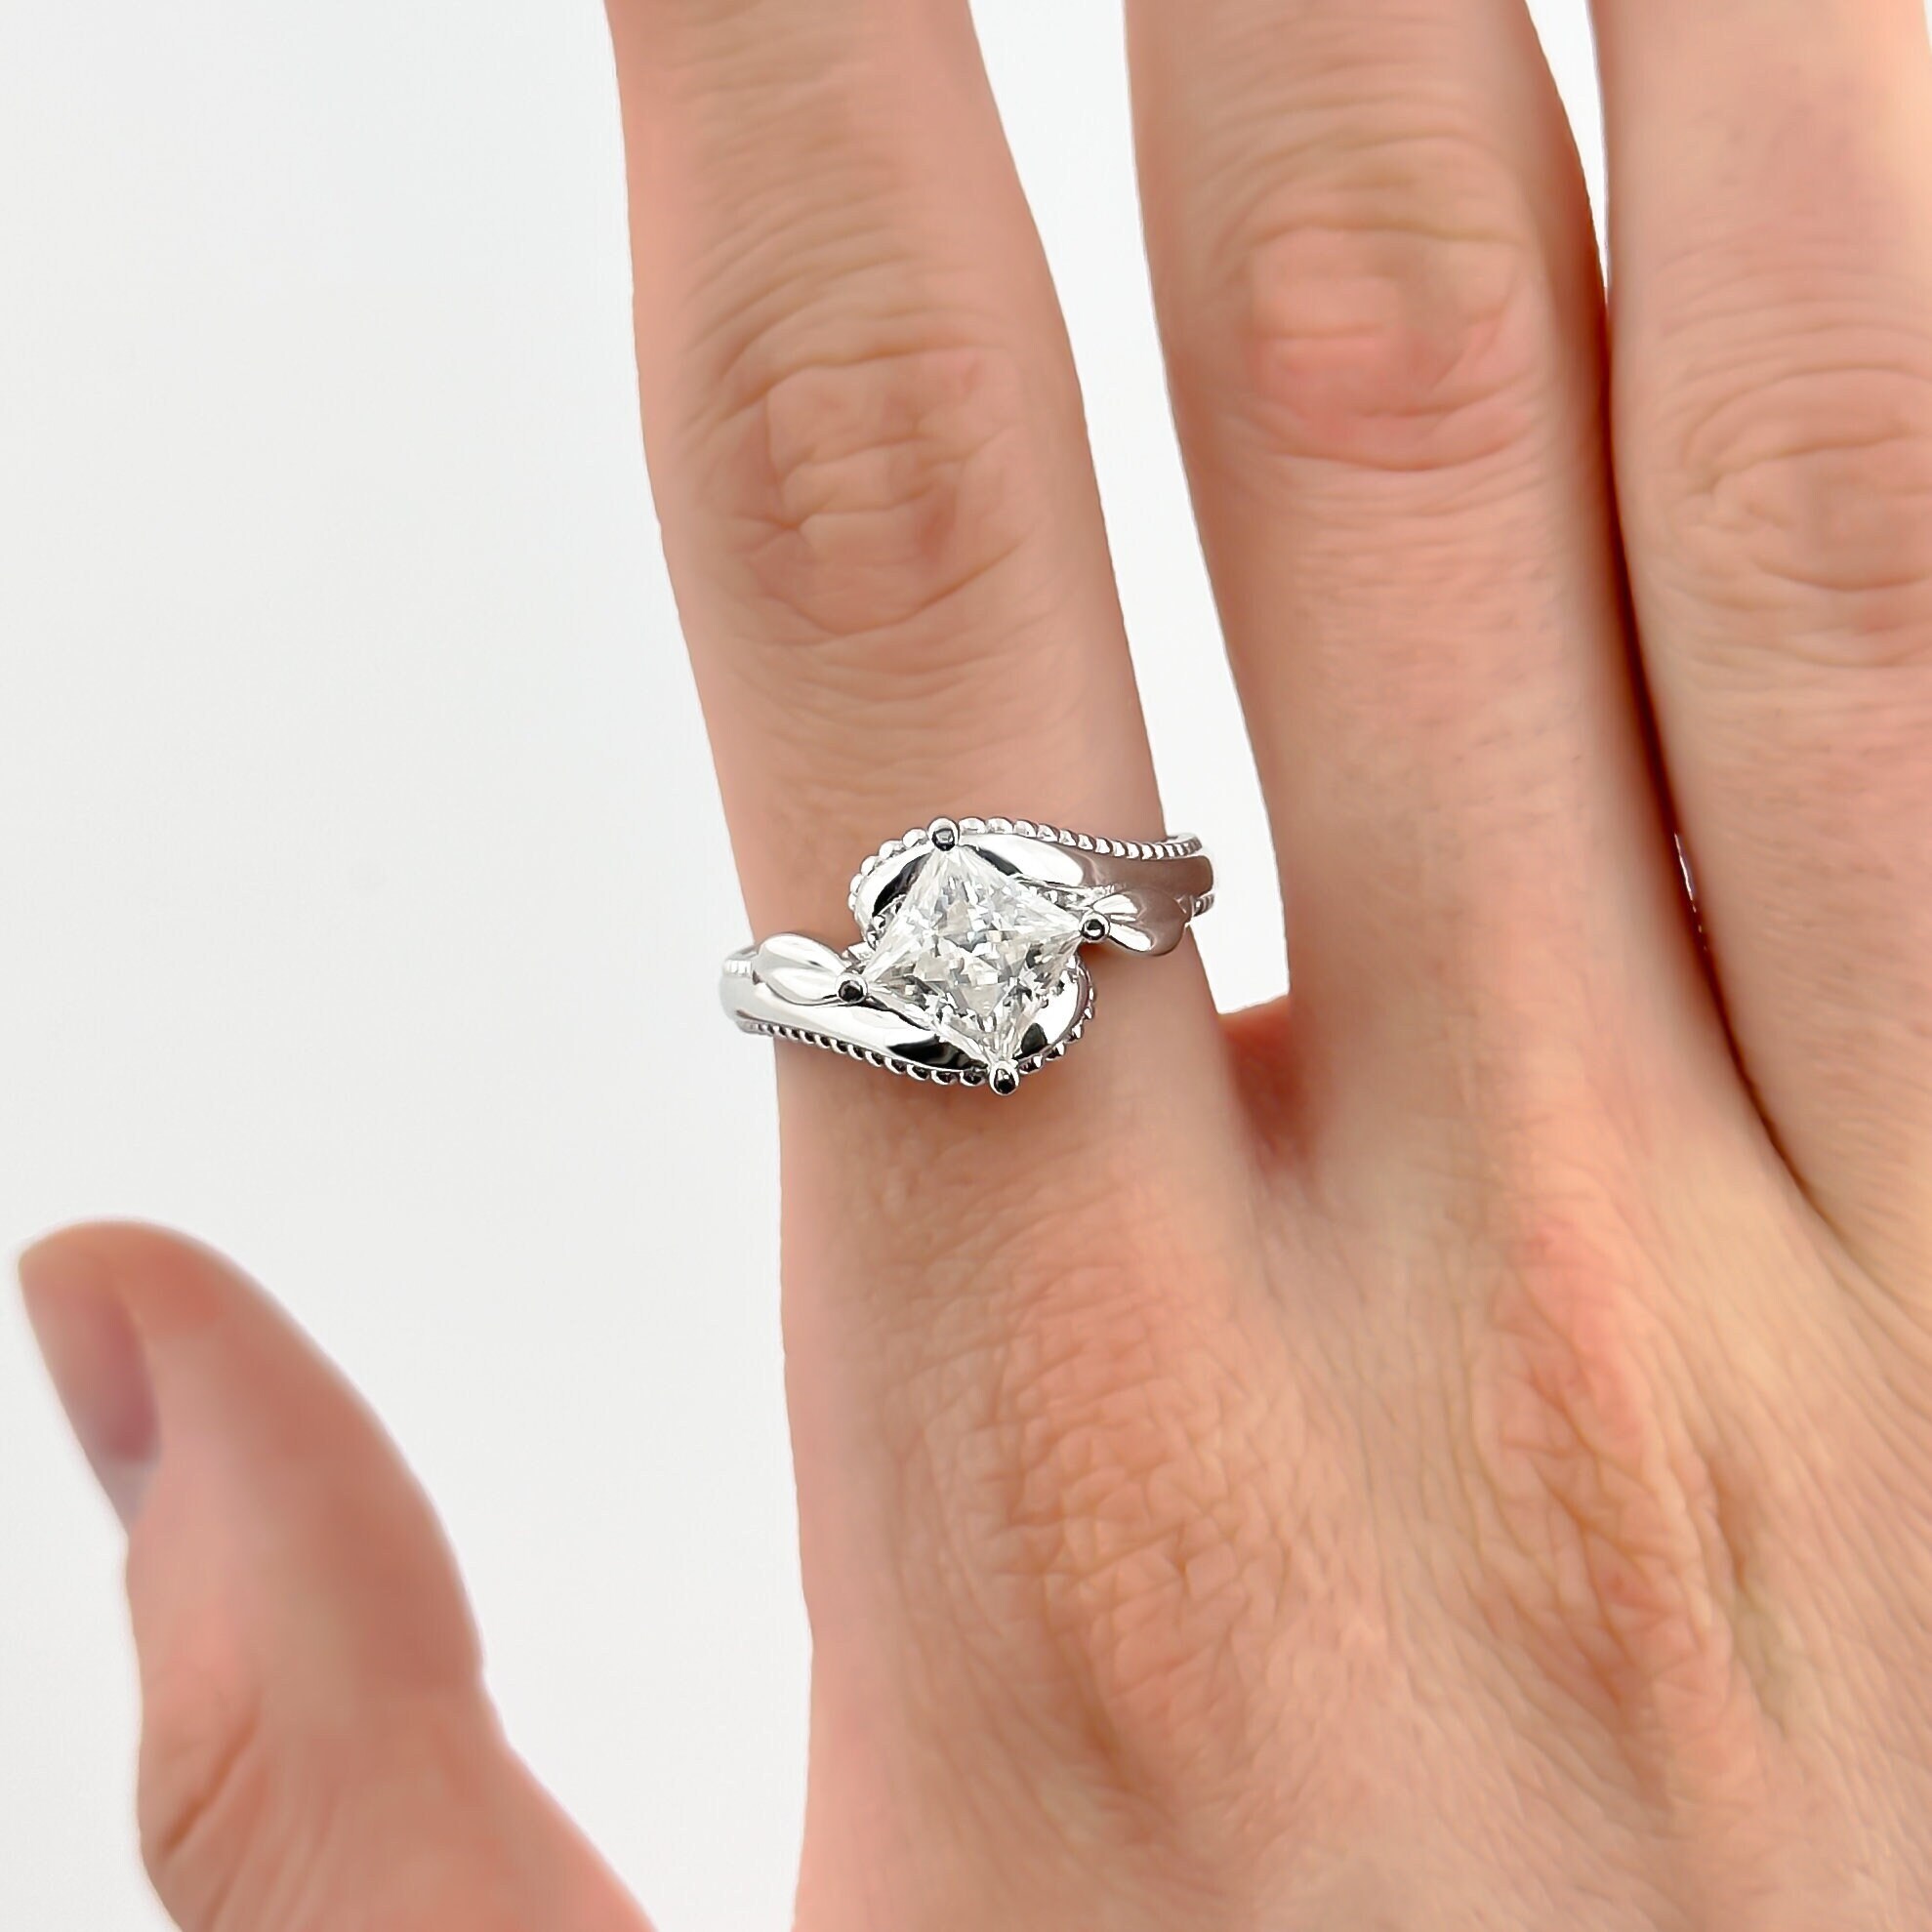 7+ Unique Engagement Ring Sets To Buy Online 2023 | Eden Garden Jewelry™